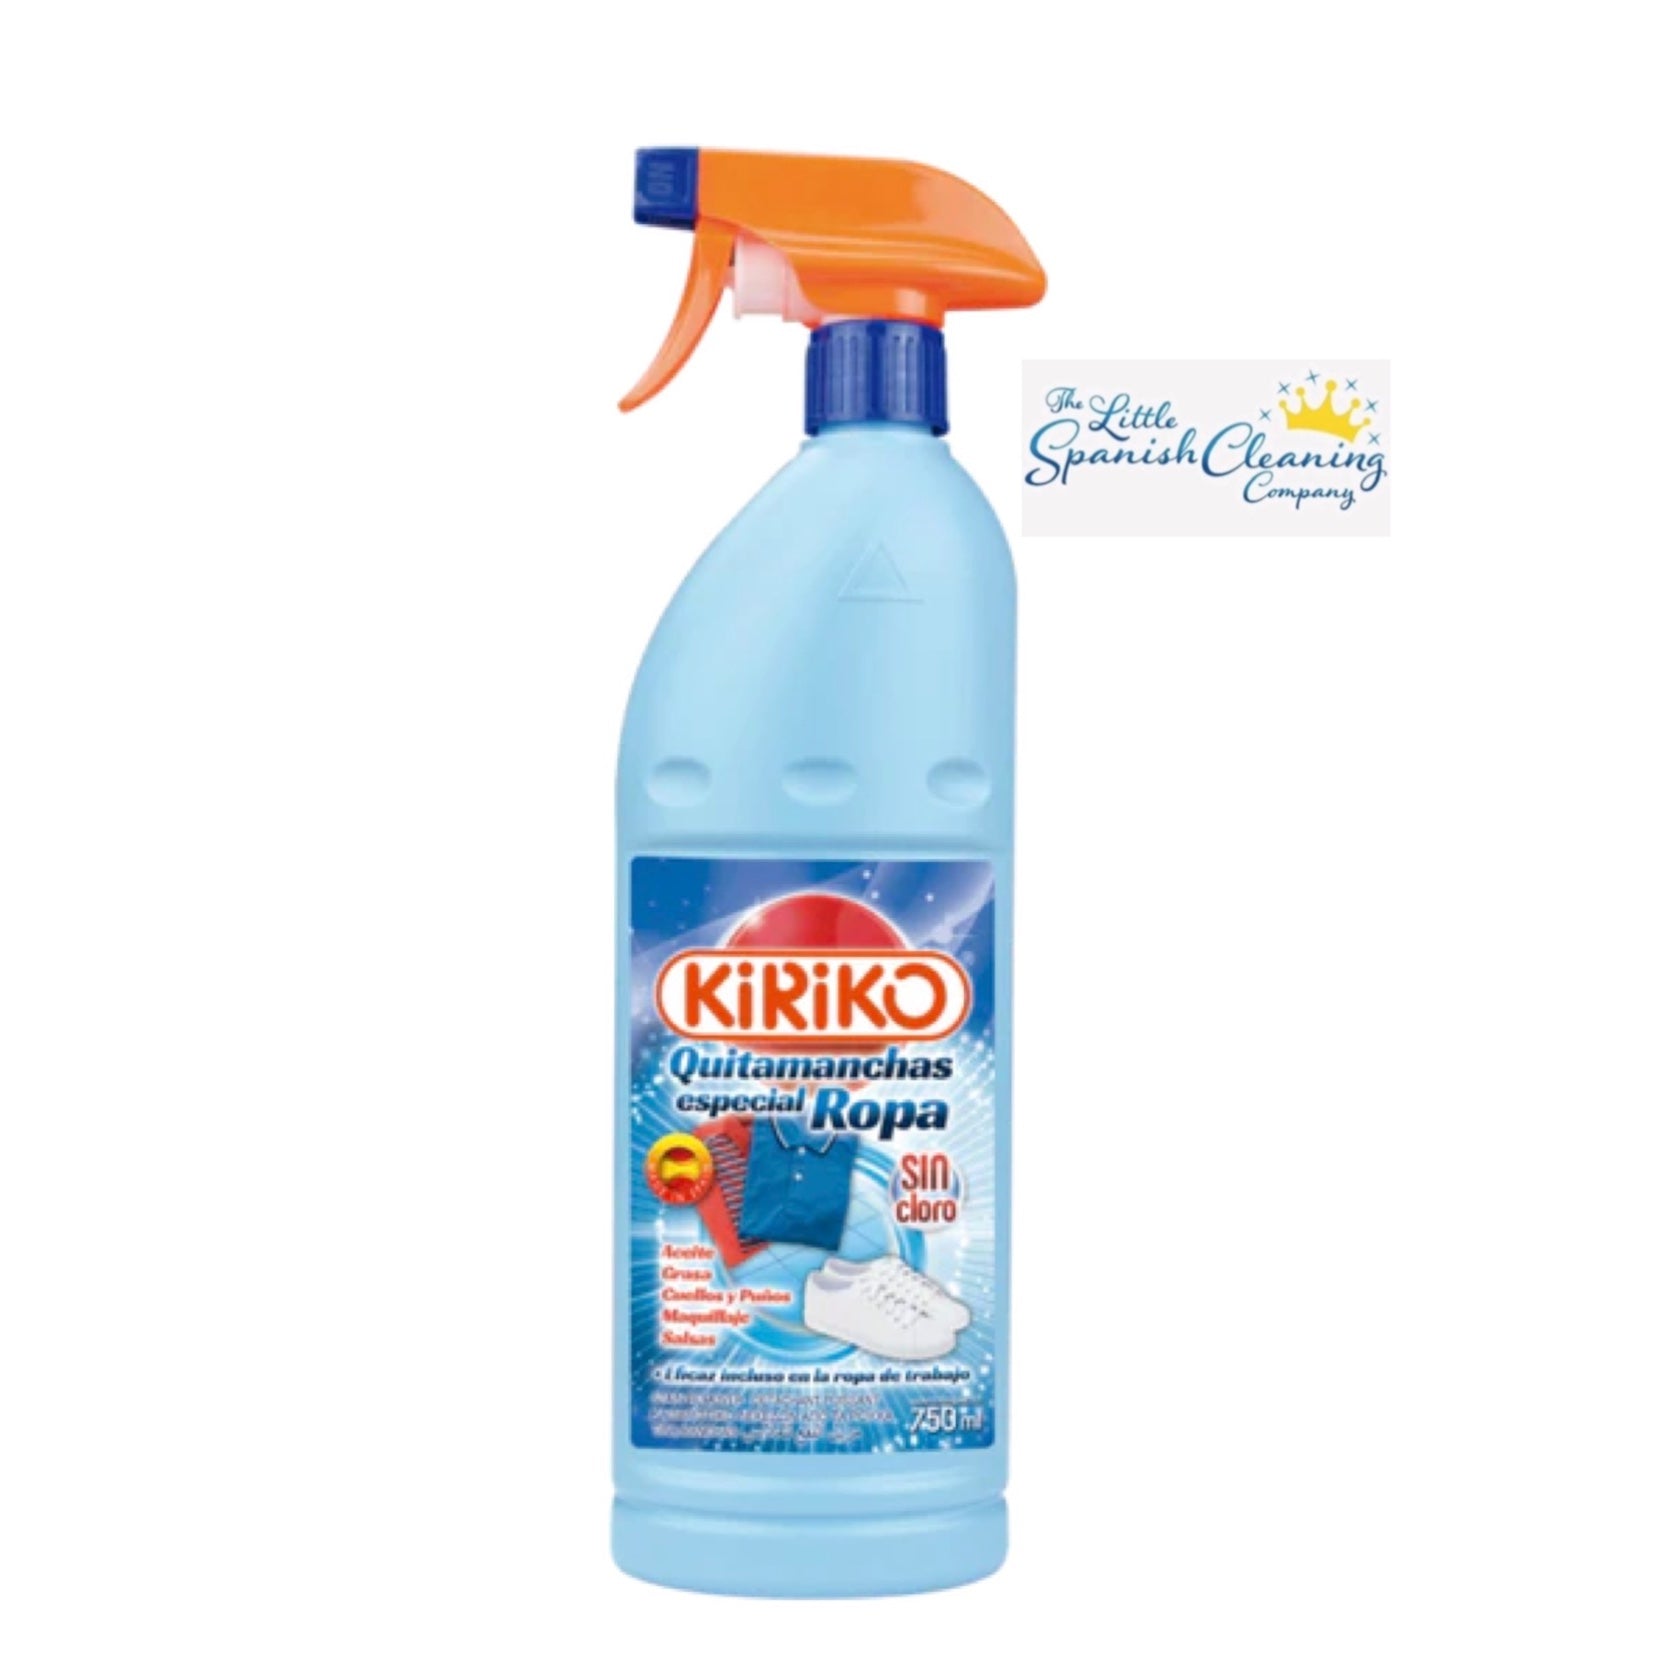 Kiriko Stain Remover Spray